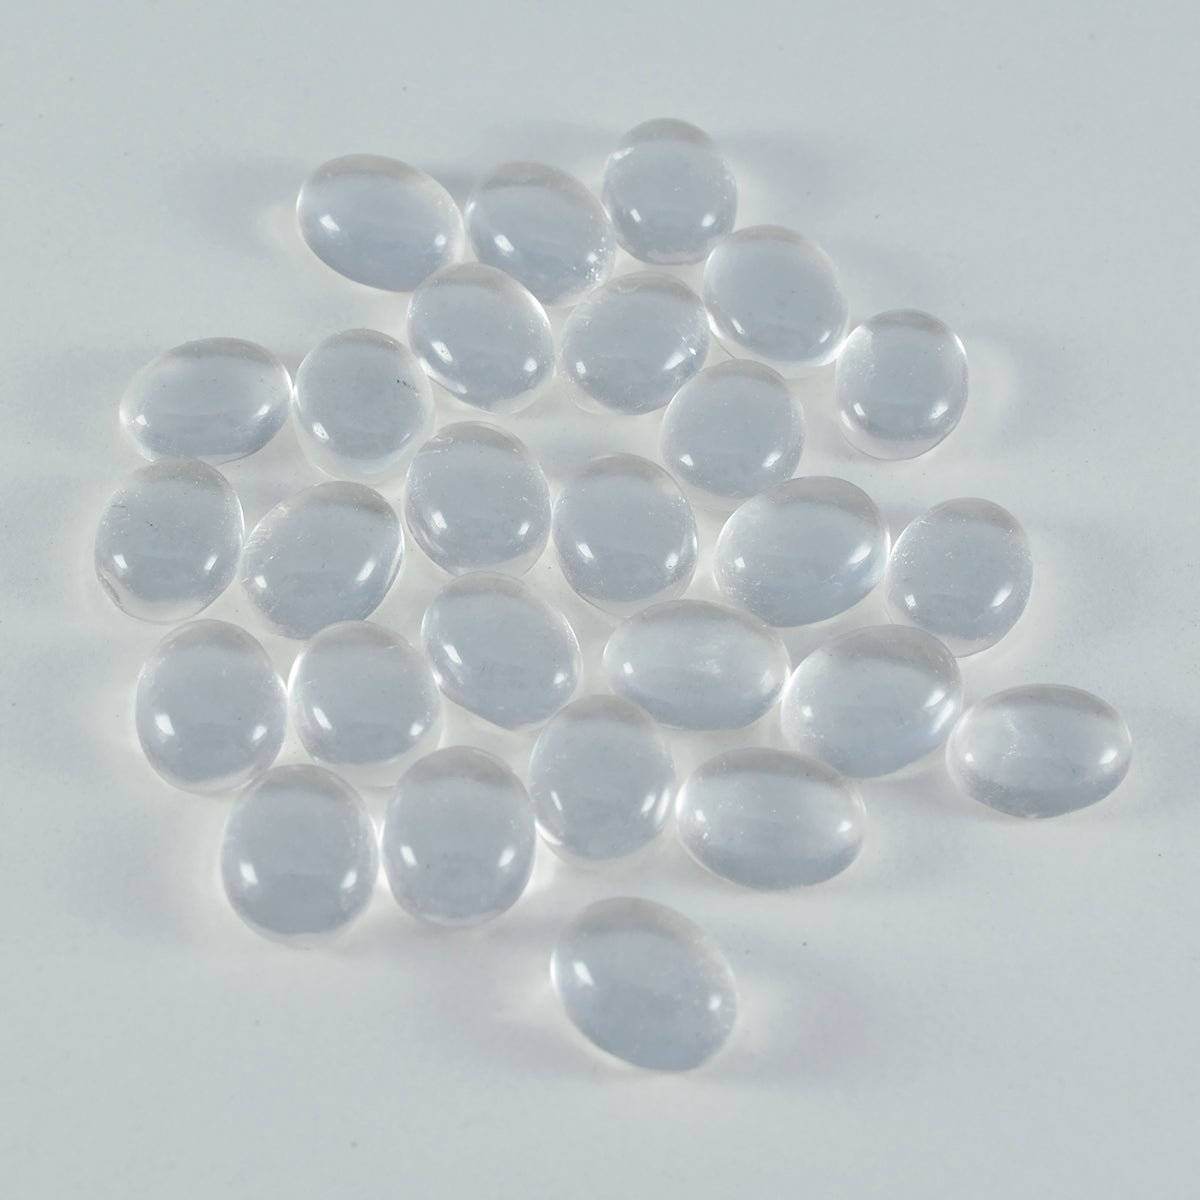 Riyogems 1PC White Crystal Quartz Cabochon 7x9 mm Oval Shape lovely Quality Gem